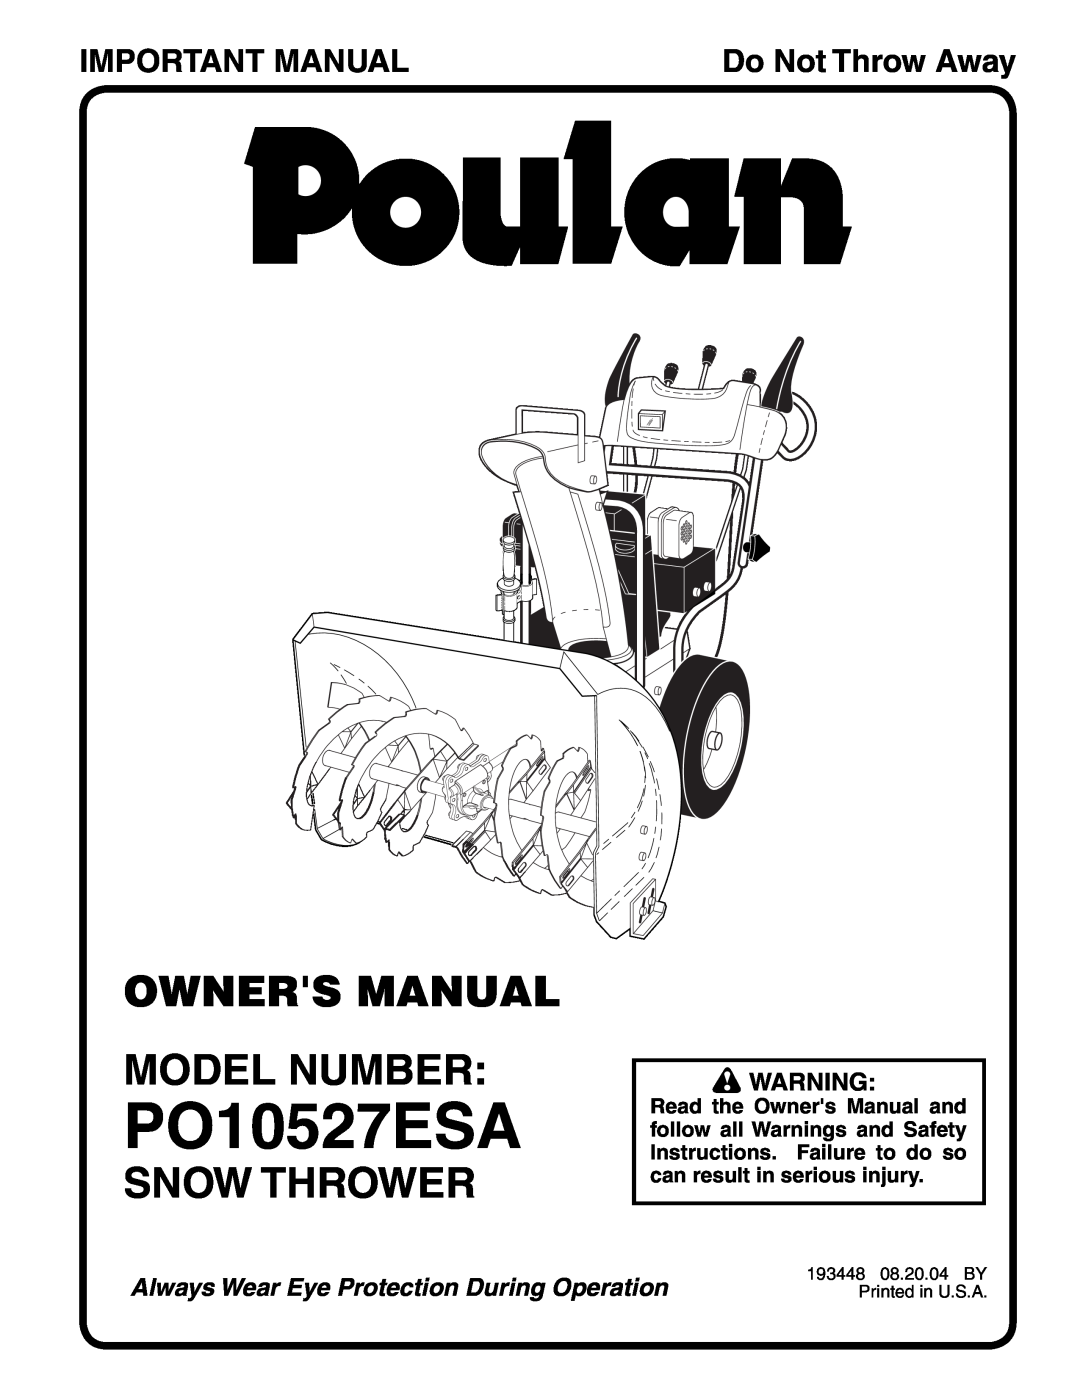 Poulan PO10527ESA owner manual Snow Thrower, Important Manual, Do Not Throw Away 